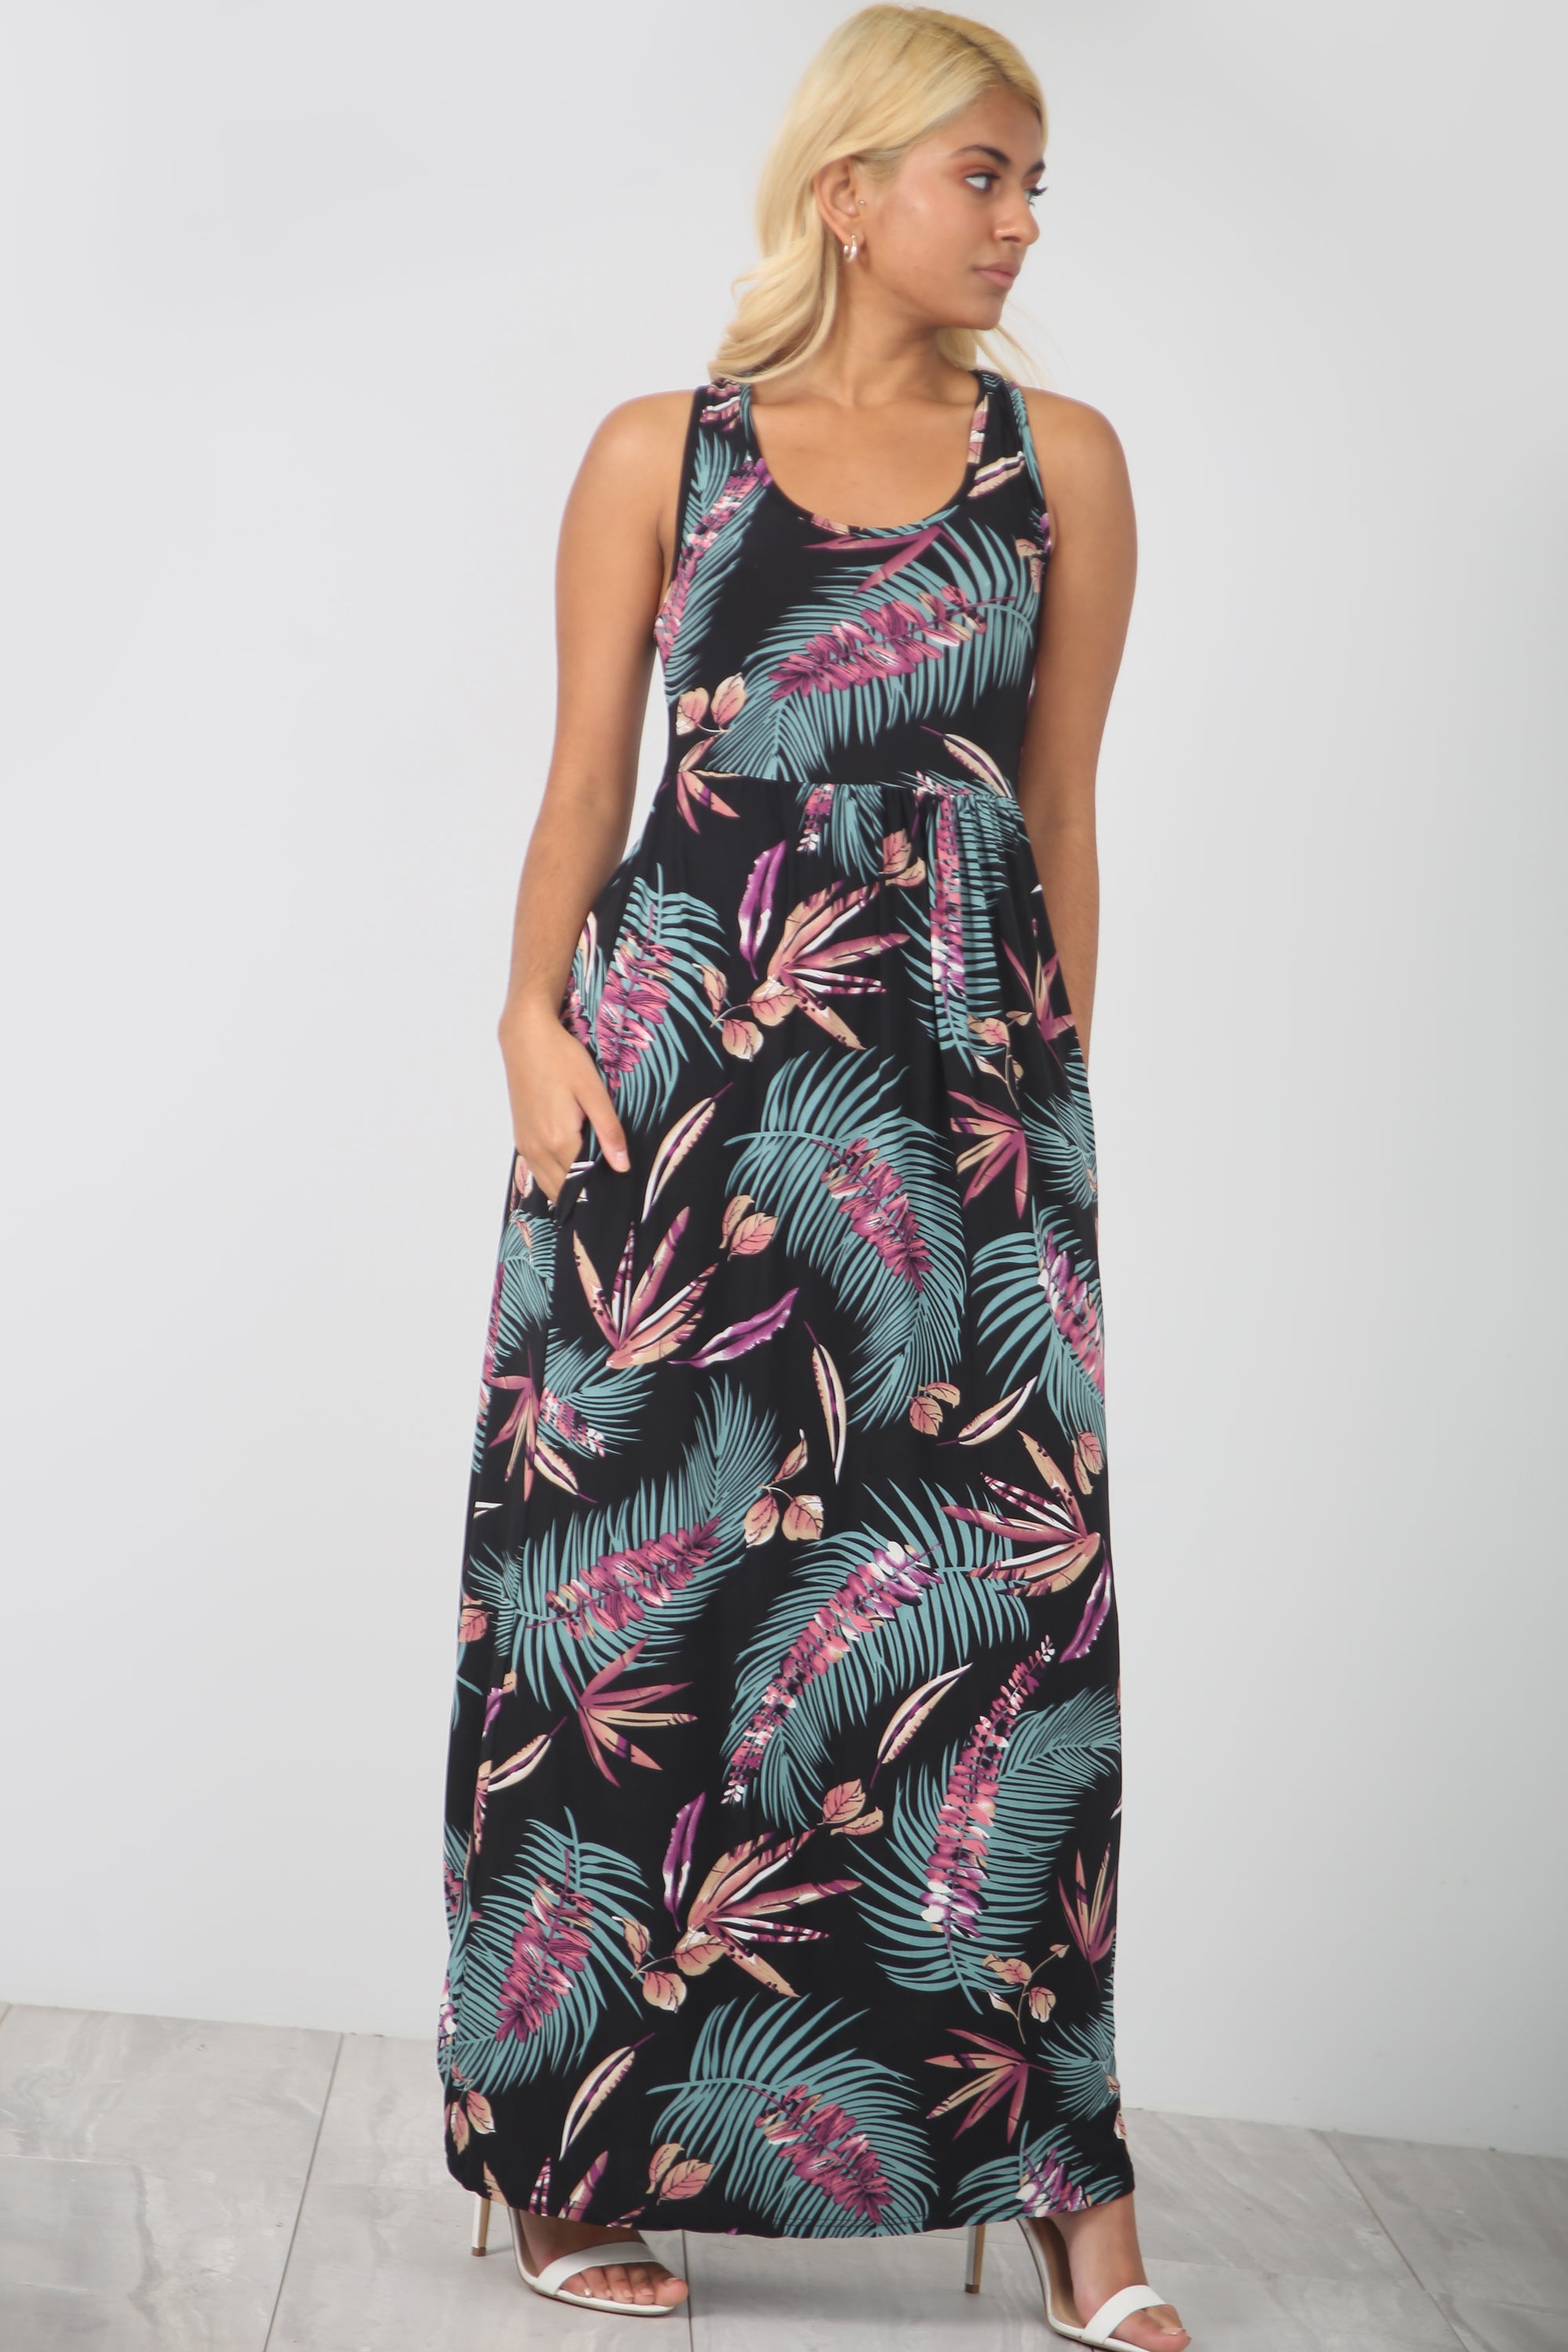 Floral Print Navy Maxi Dress With Pockets - bejealous-com